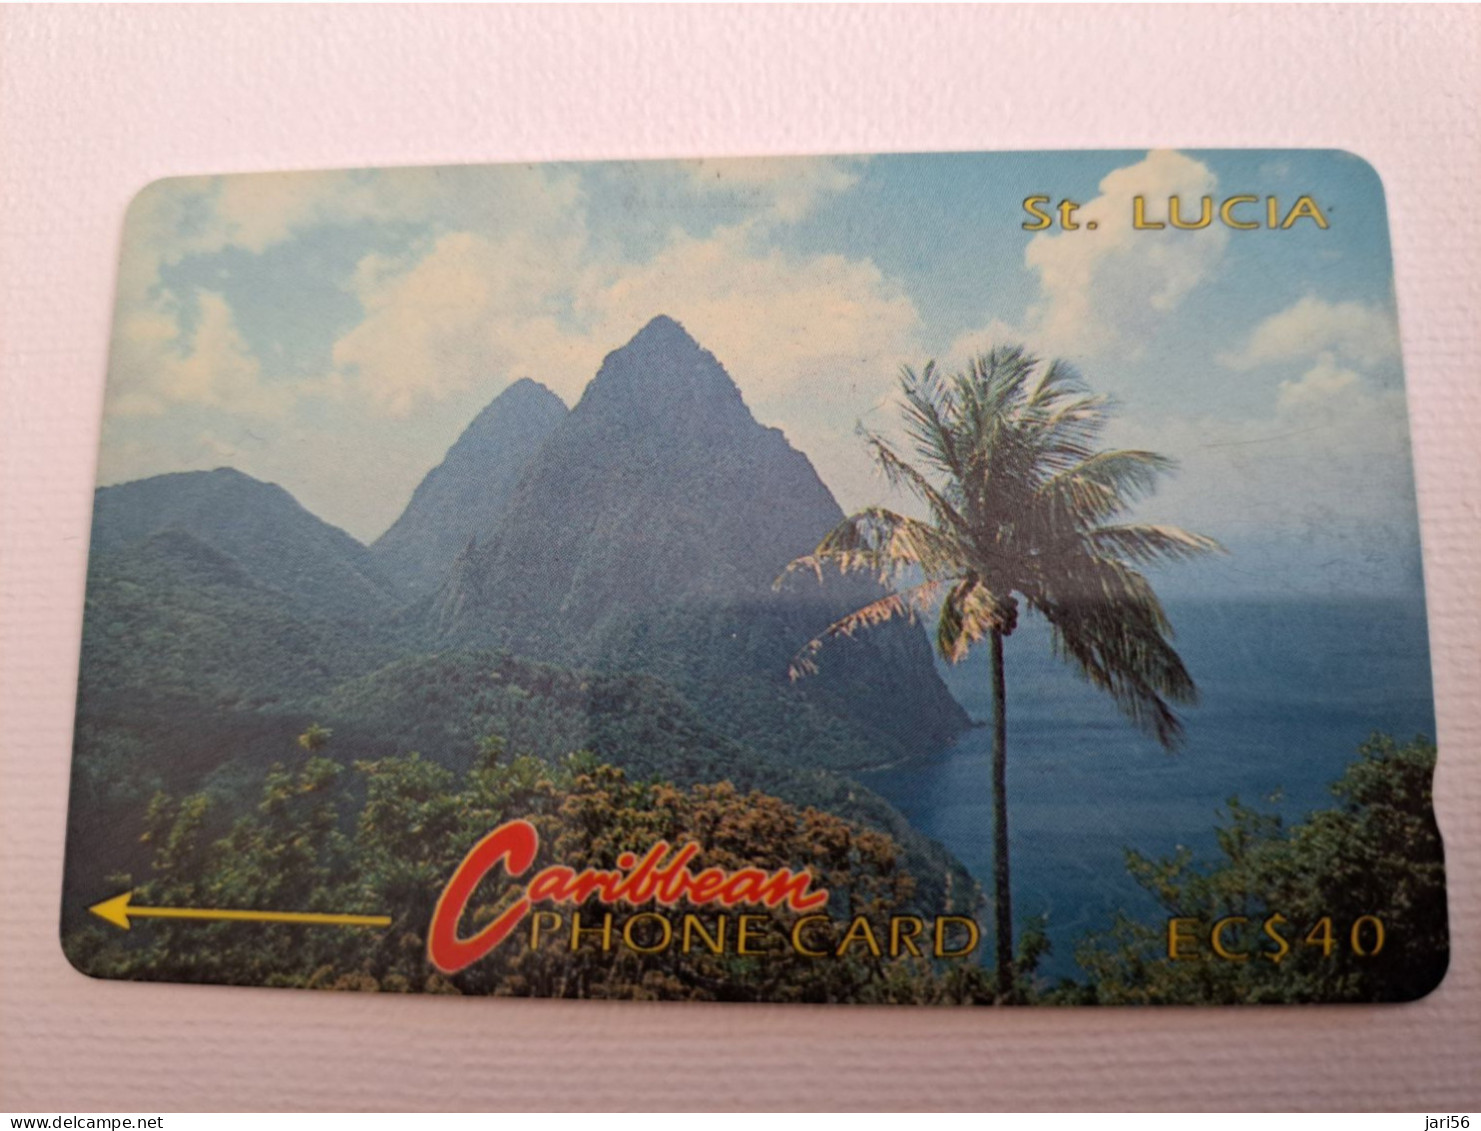 ST LUCIA    $ 40  CABLE & WIRELESS  STL-3C  3CSLC      Fine Used Card ** 13525** - Saint Lucia